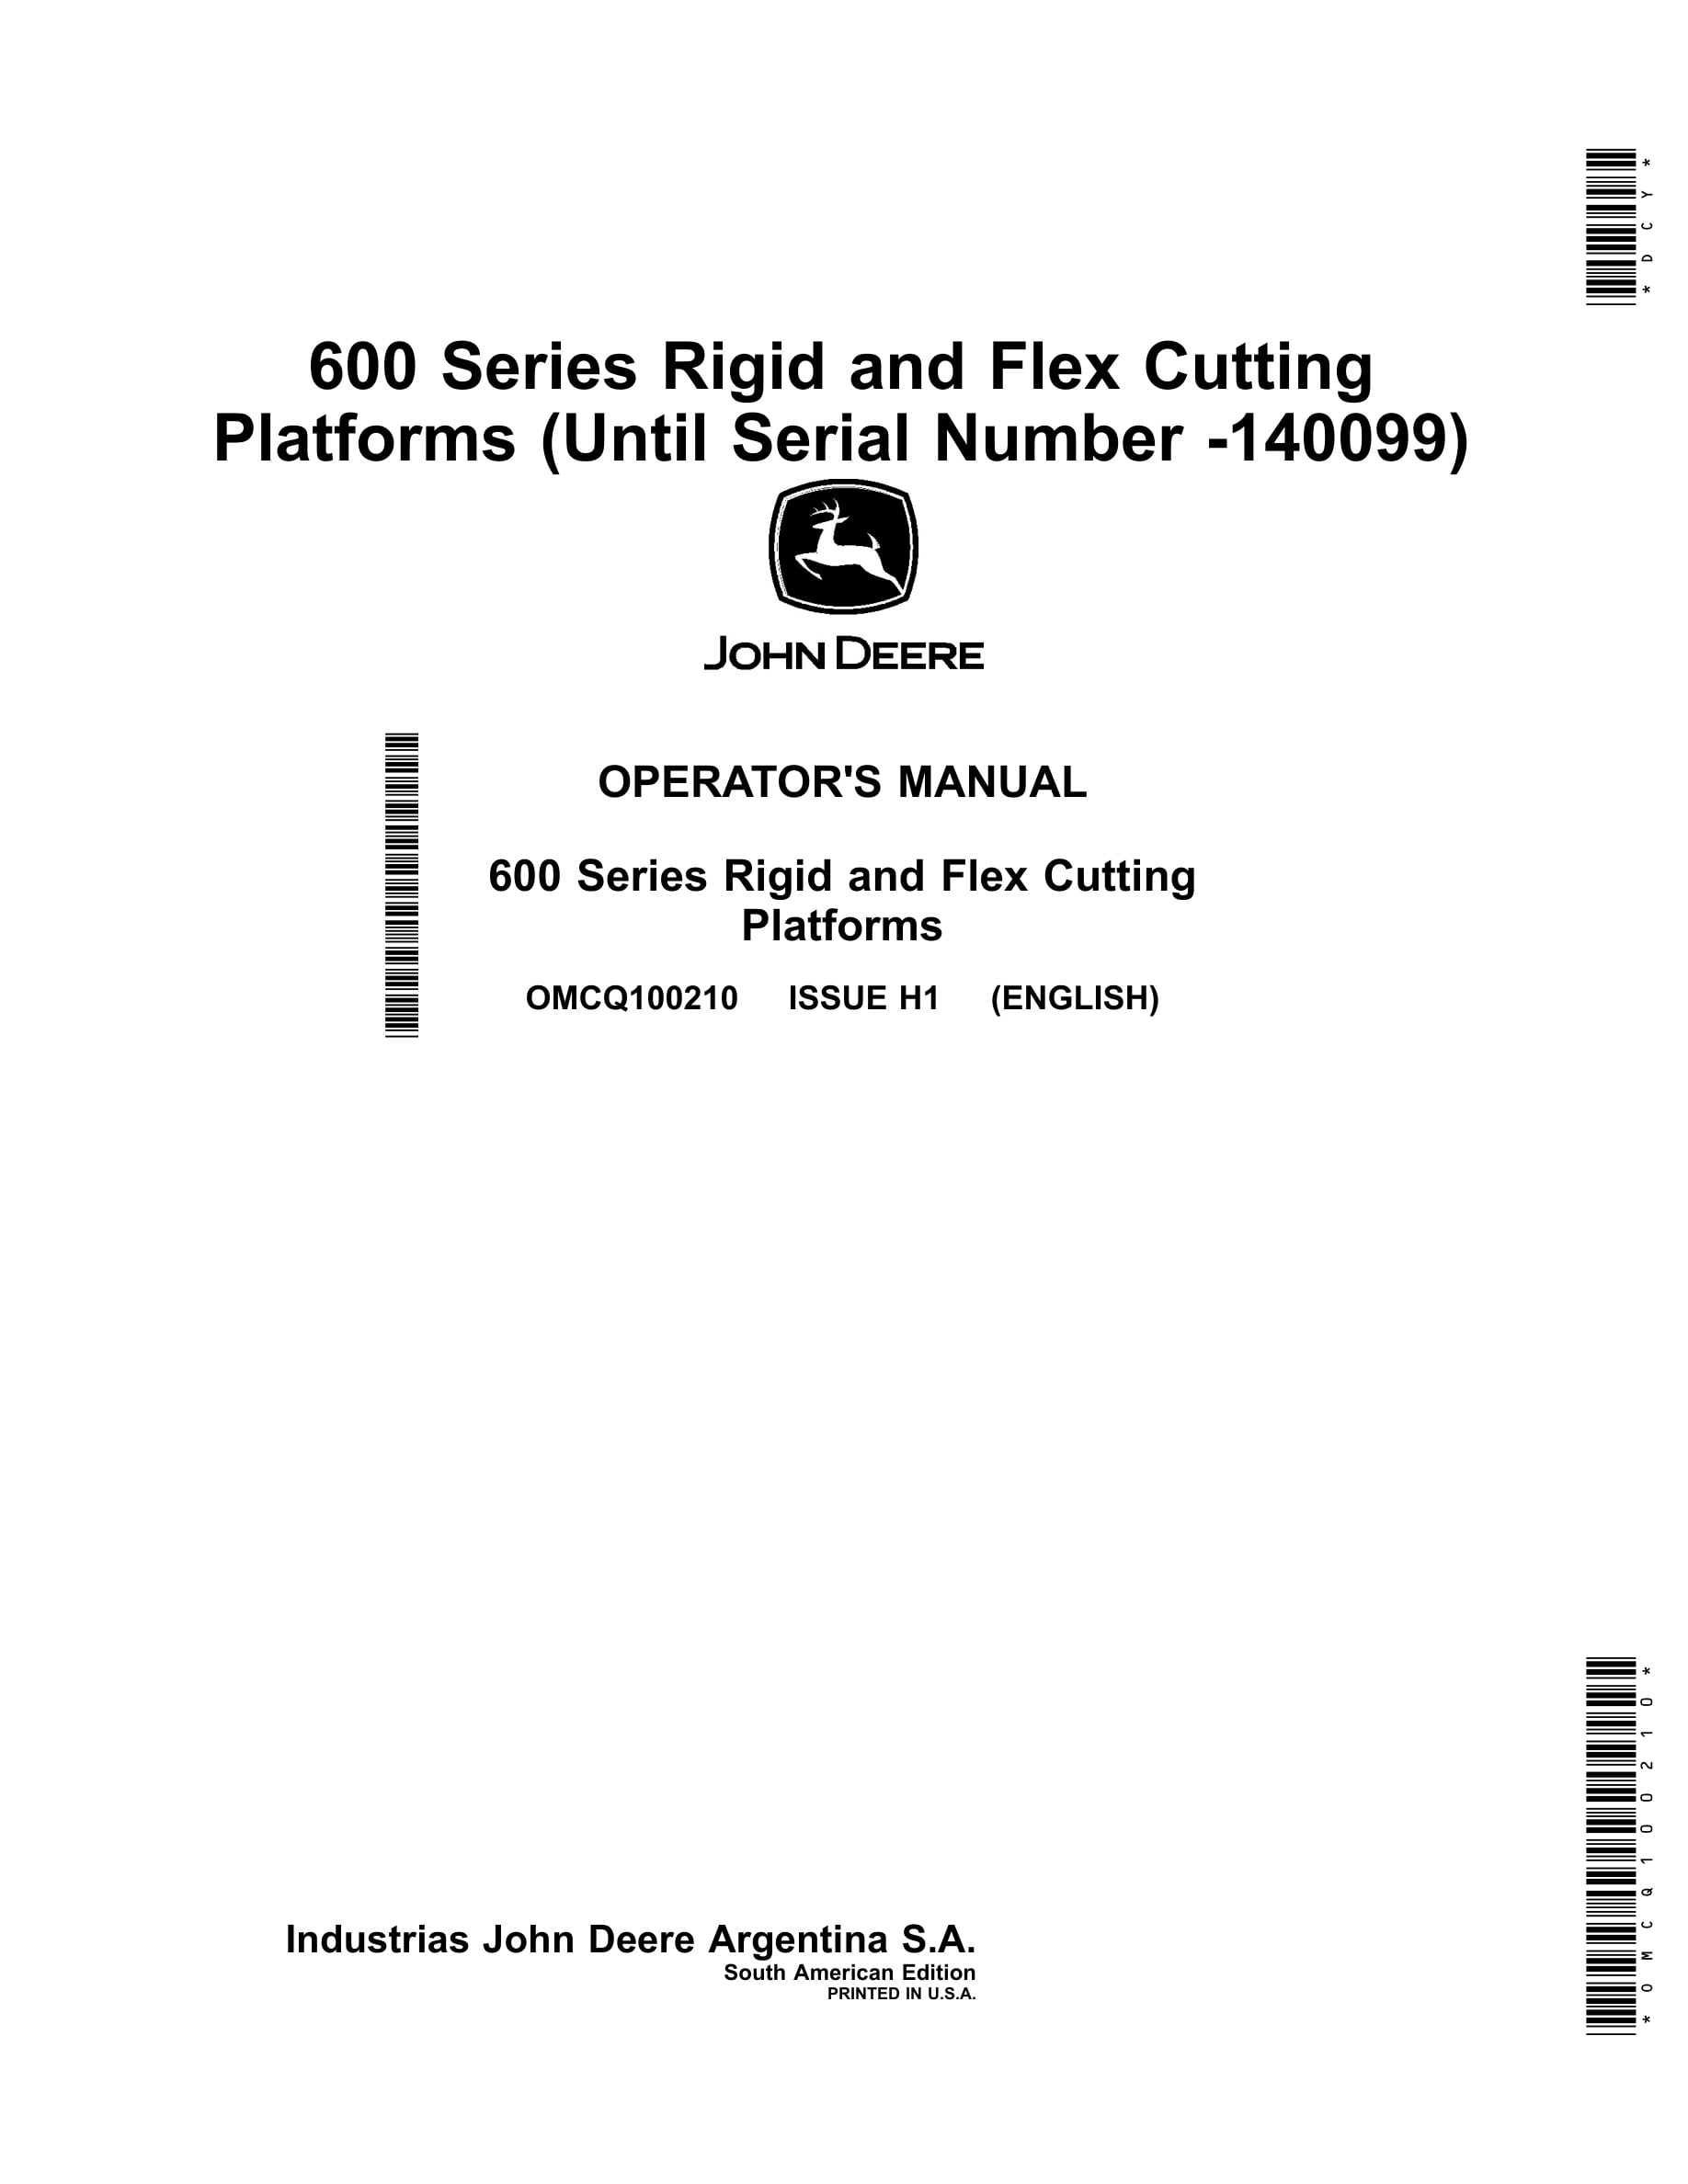 John Deere 600 Series Rigid and Flex Cutting Platforms Operator Manual OMCQ100210-1